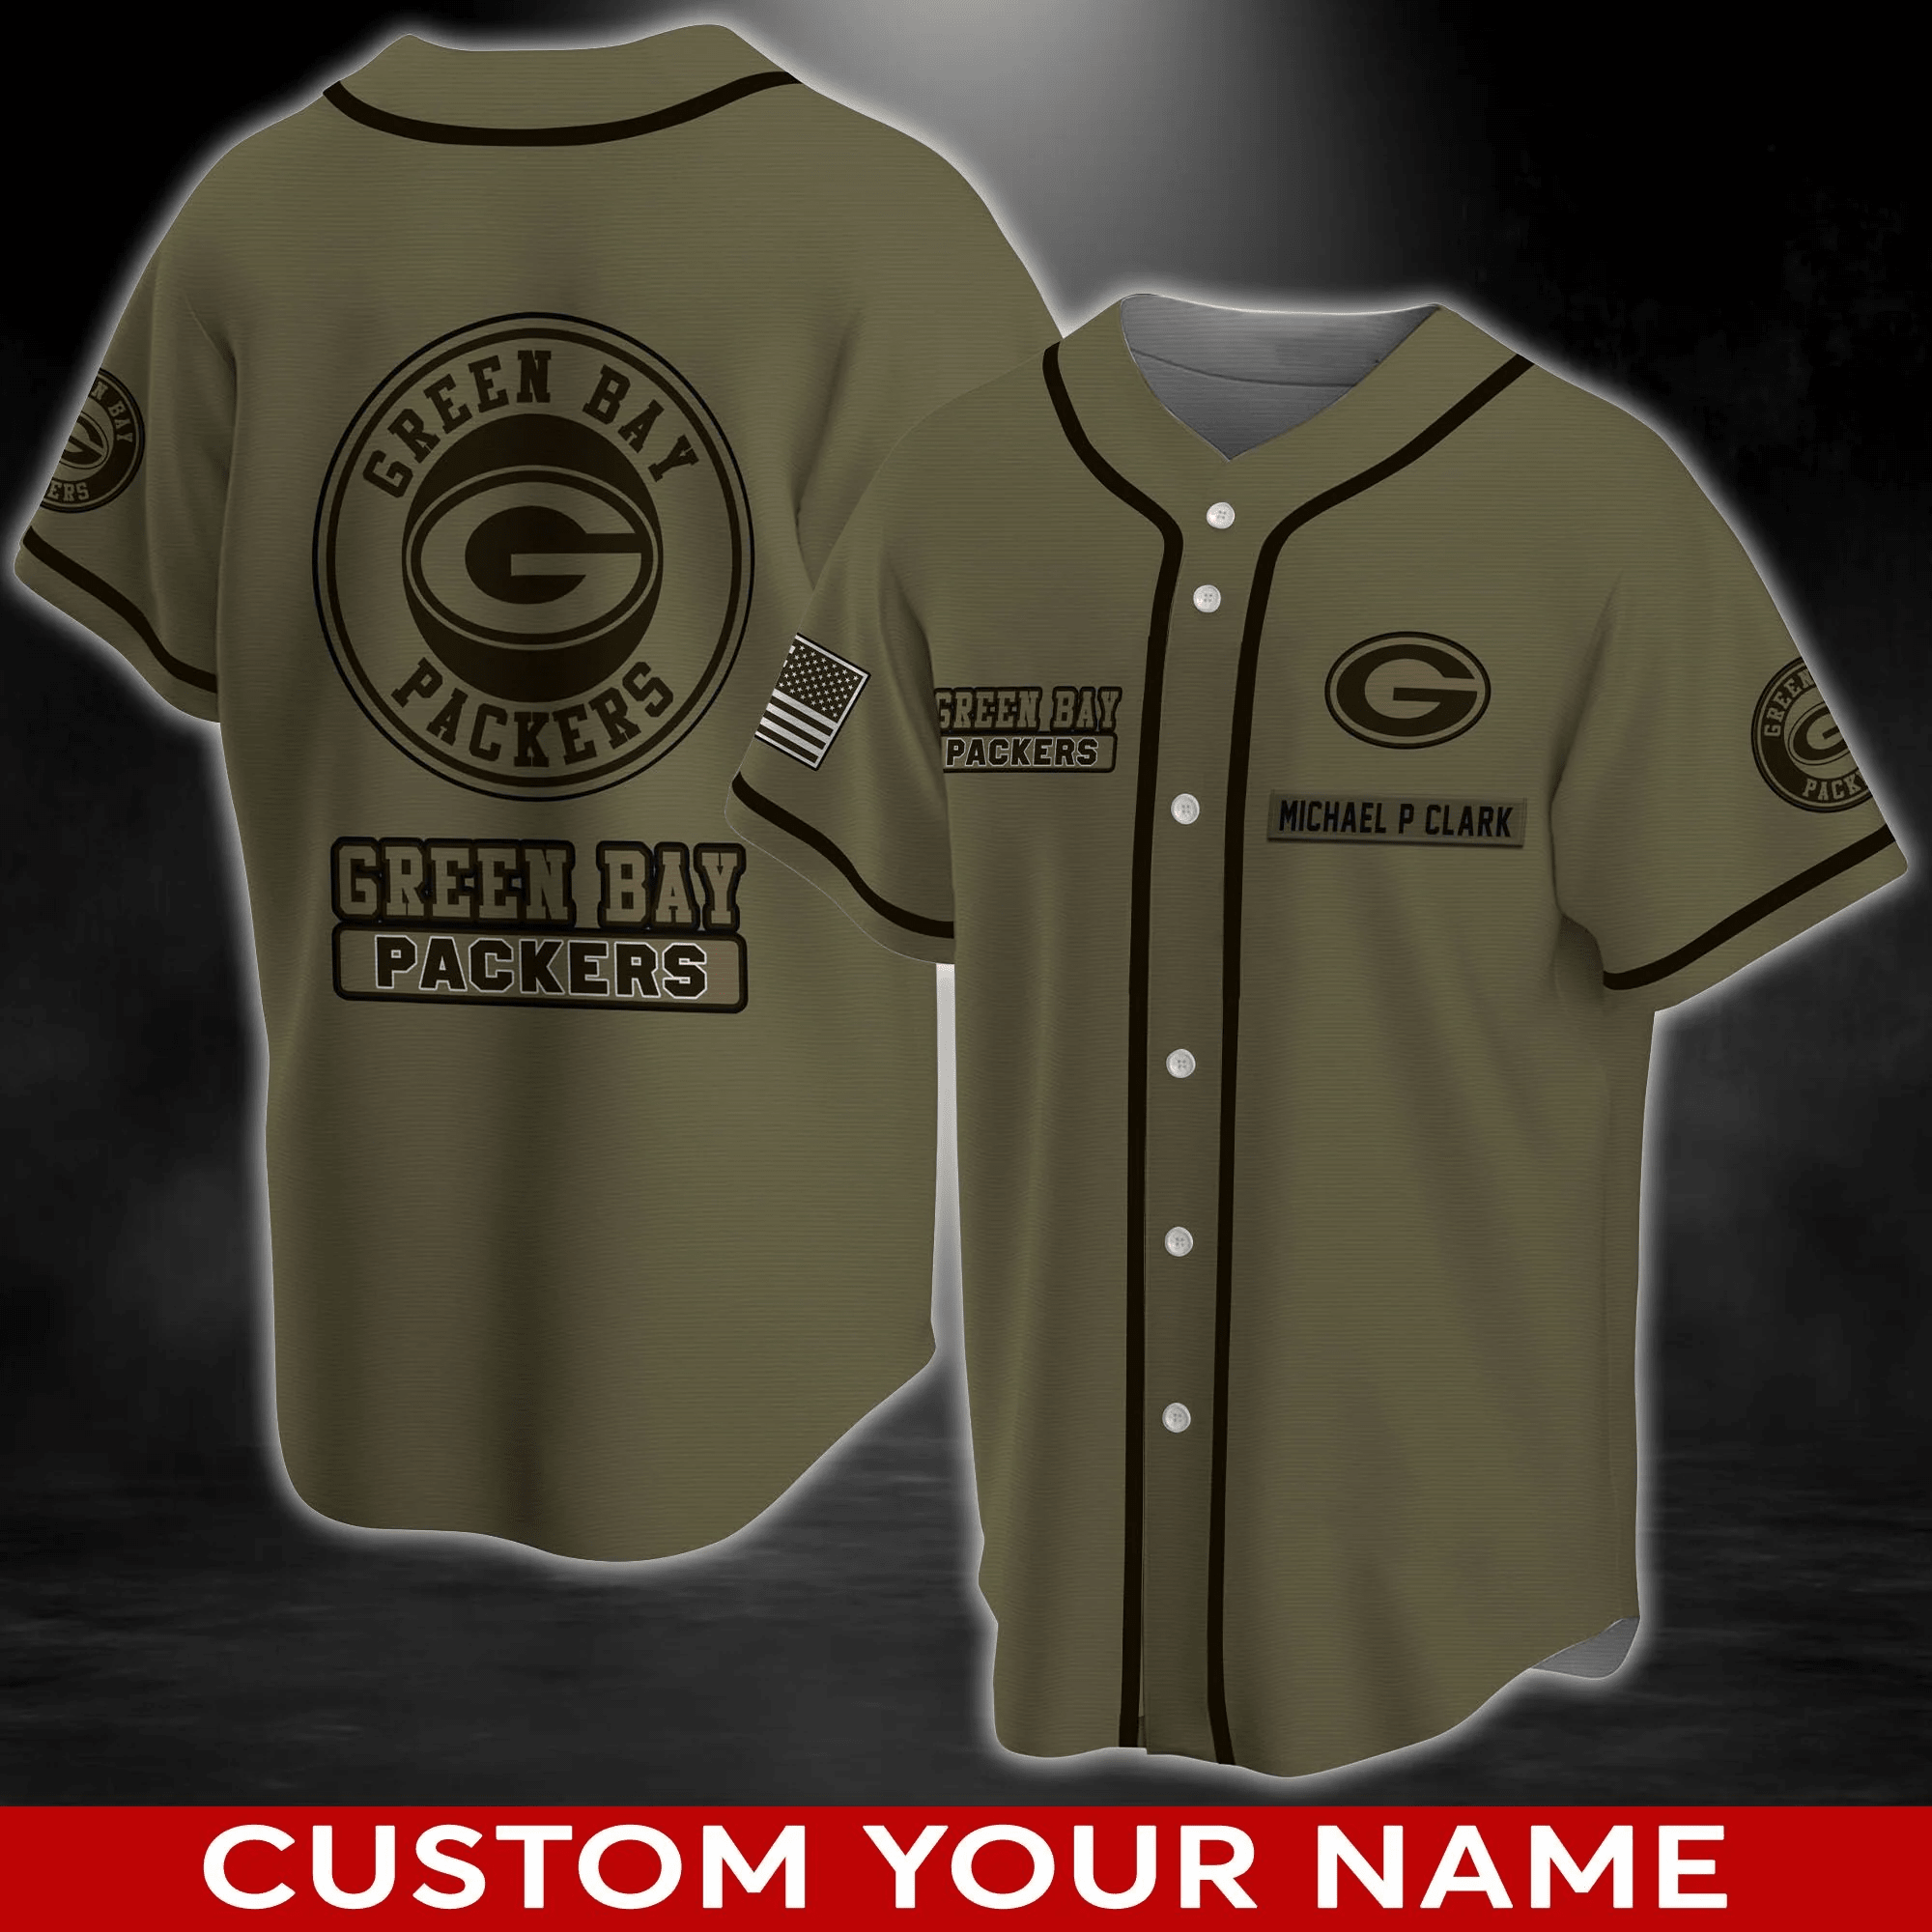 Green Bay Packers Custom Baseball Jersey Shirt - Personalized NFL Sportswear